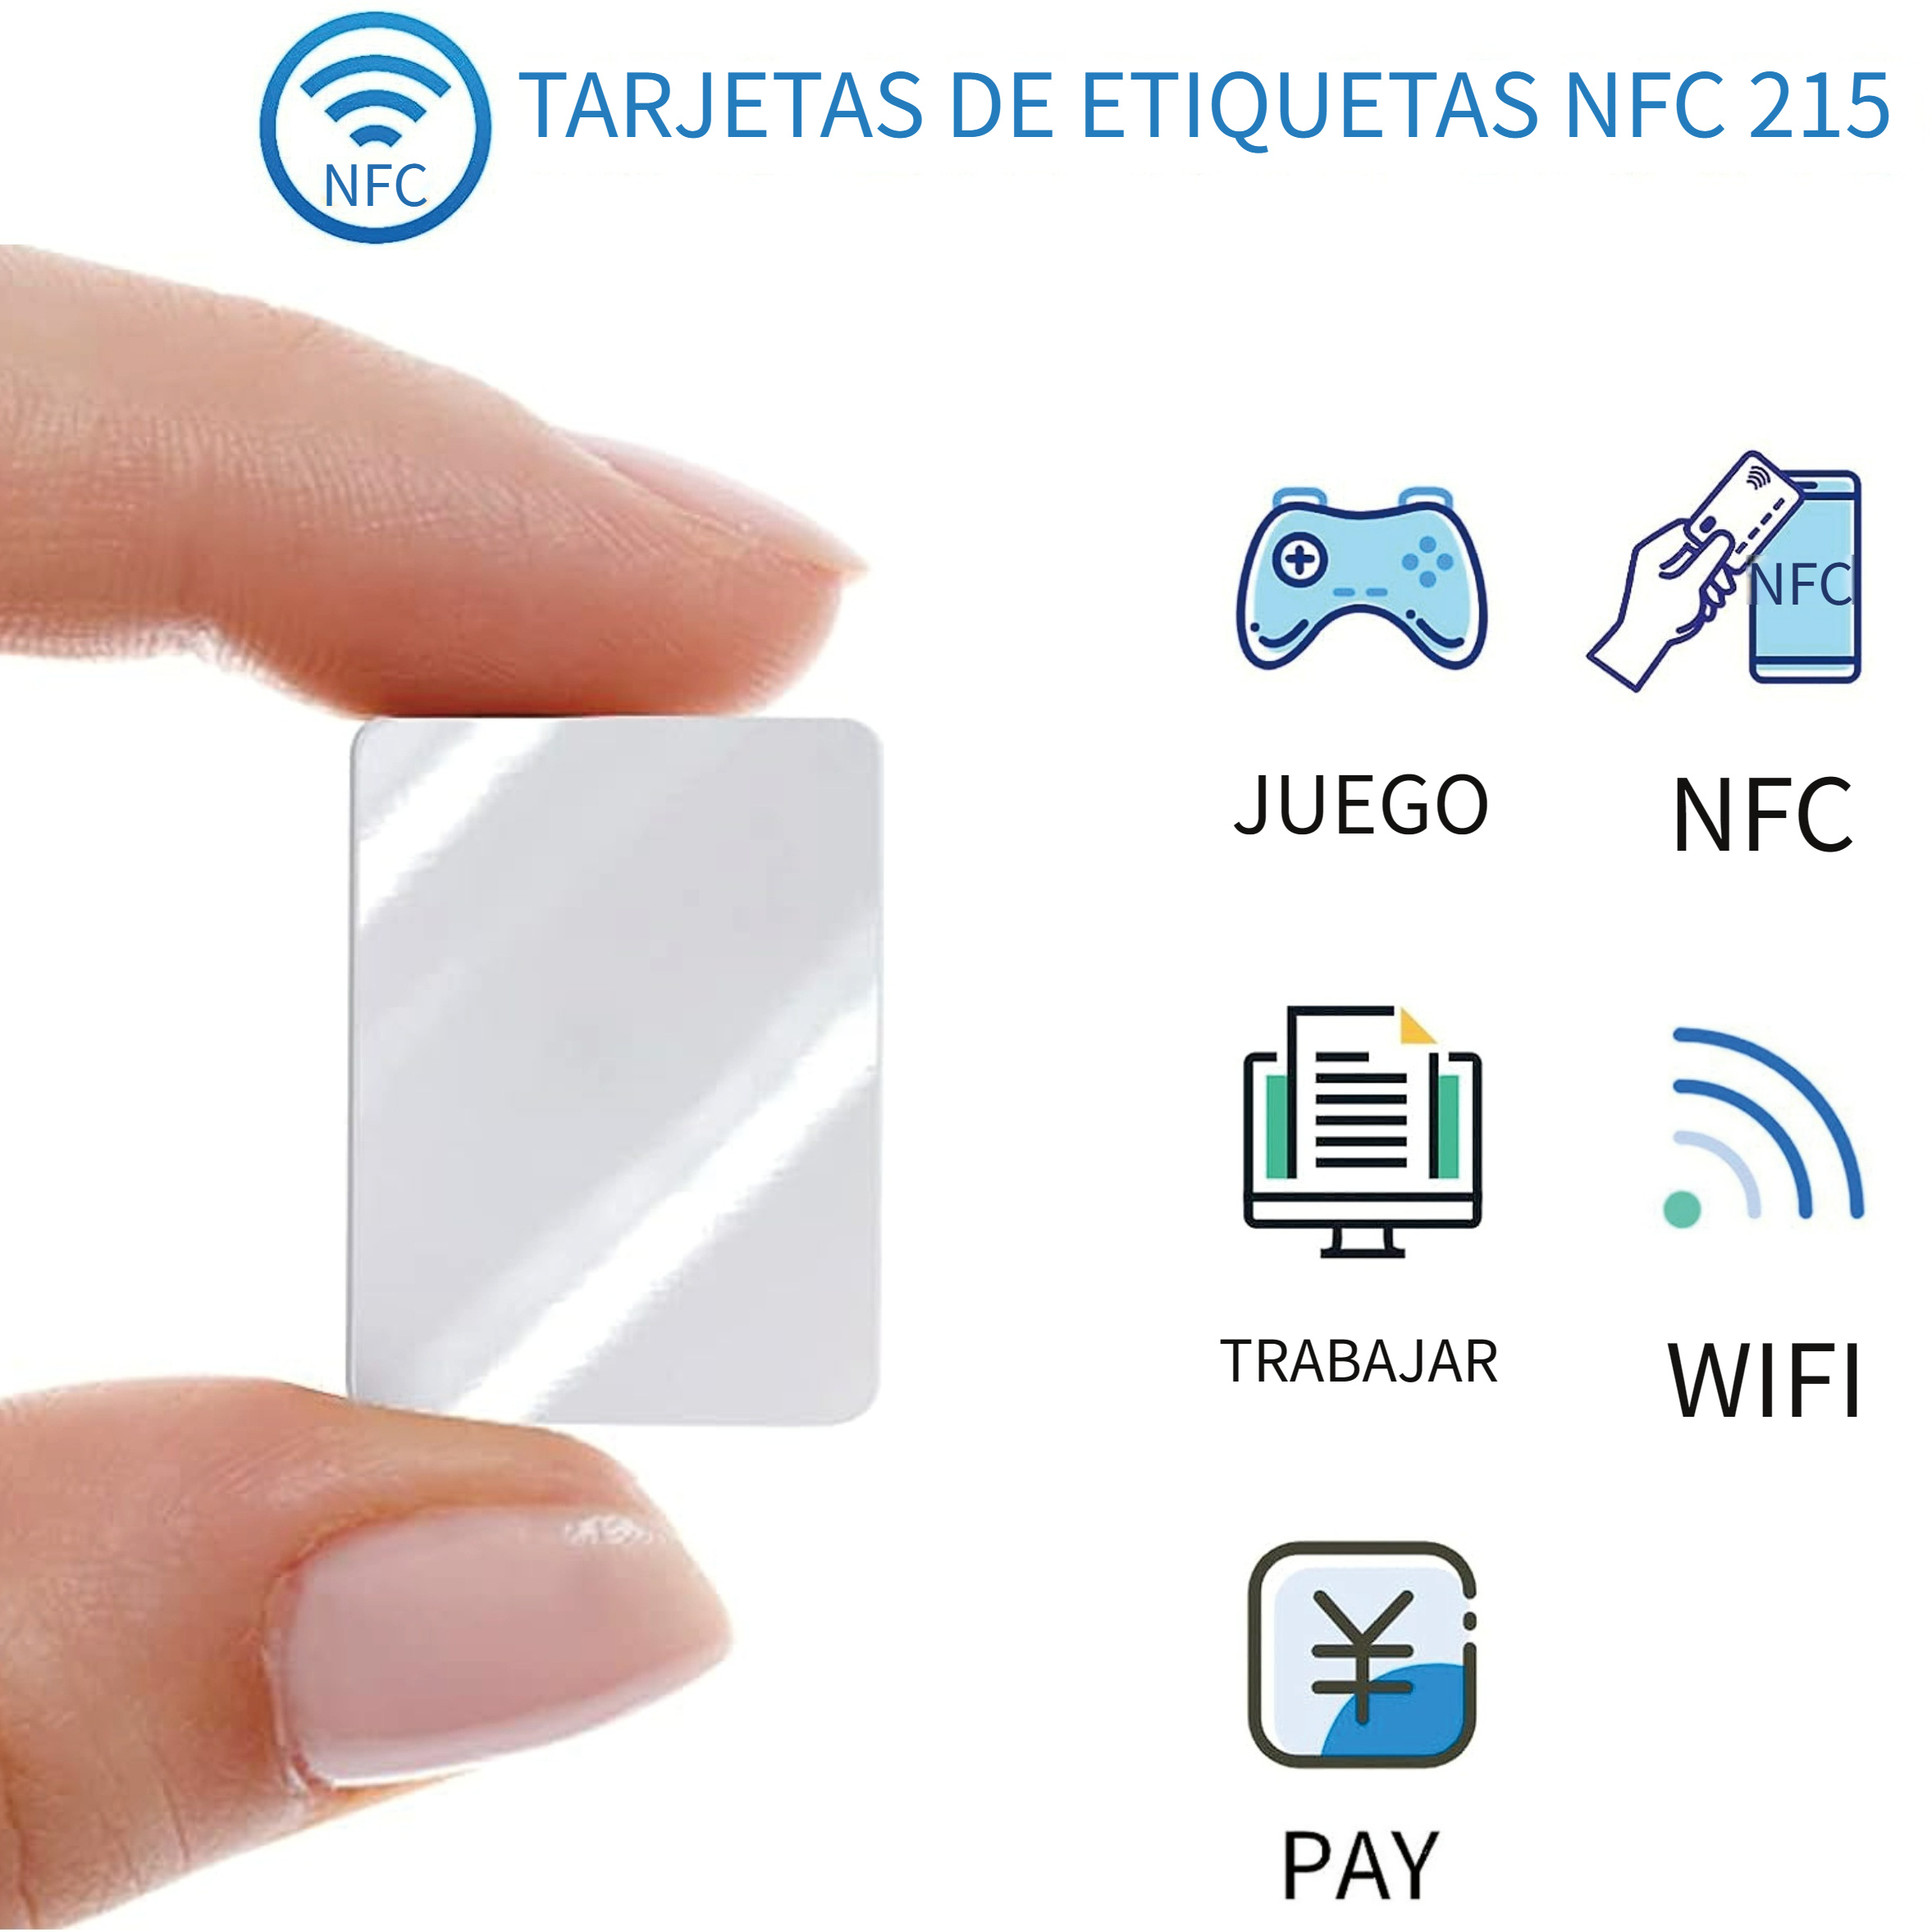 30 pegatinas NFC para etiqueta, tarjeta de visita NFC NFC 215